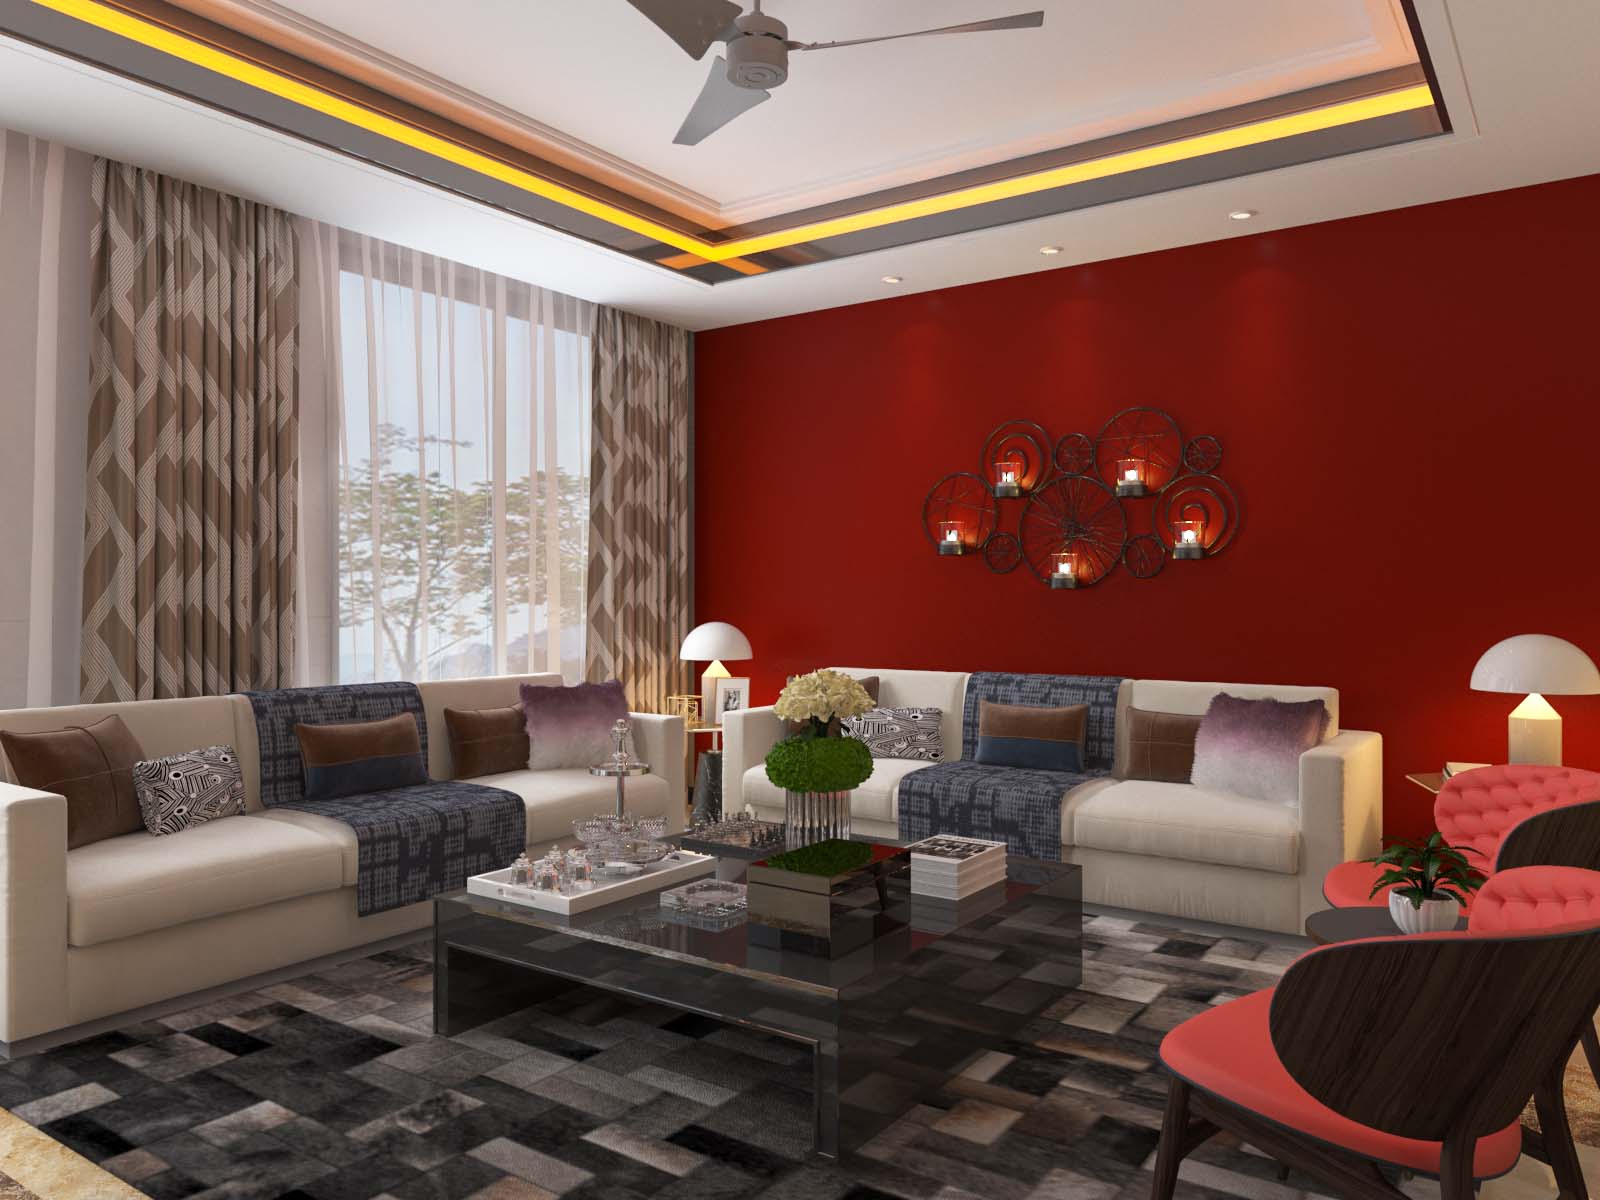 wallpaper designs for living room delhi